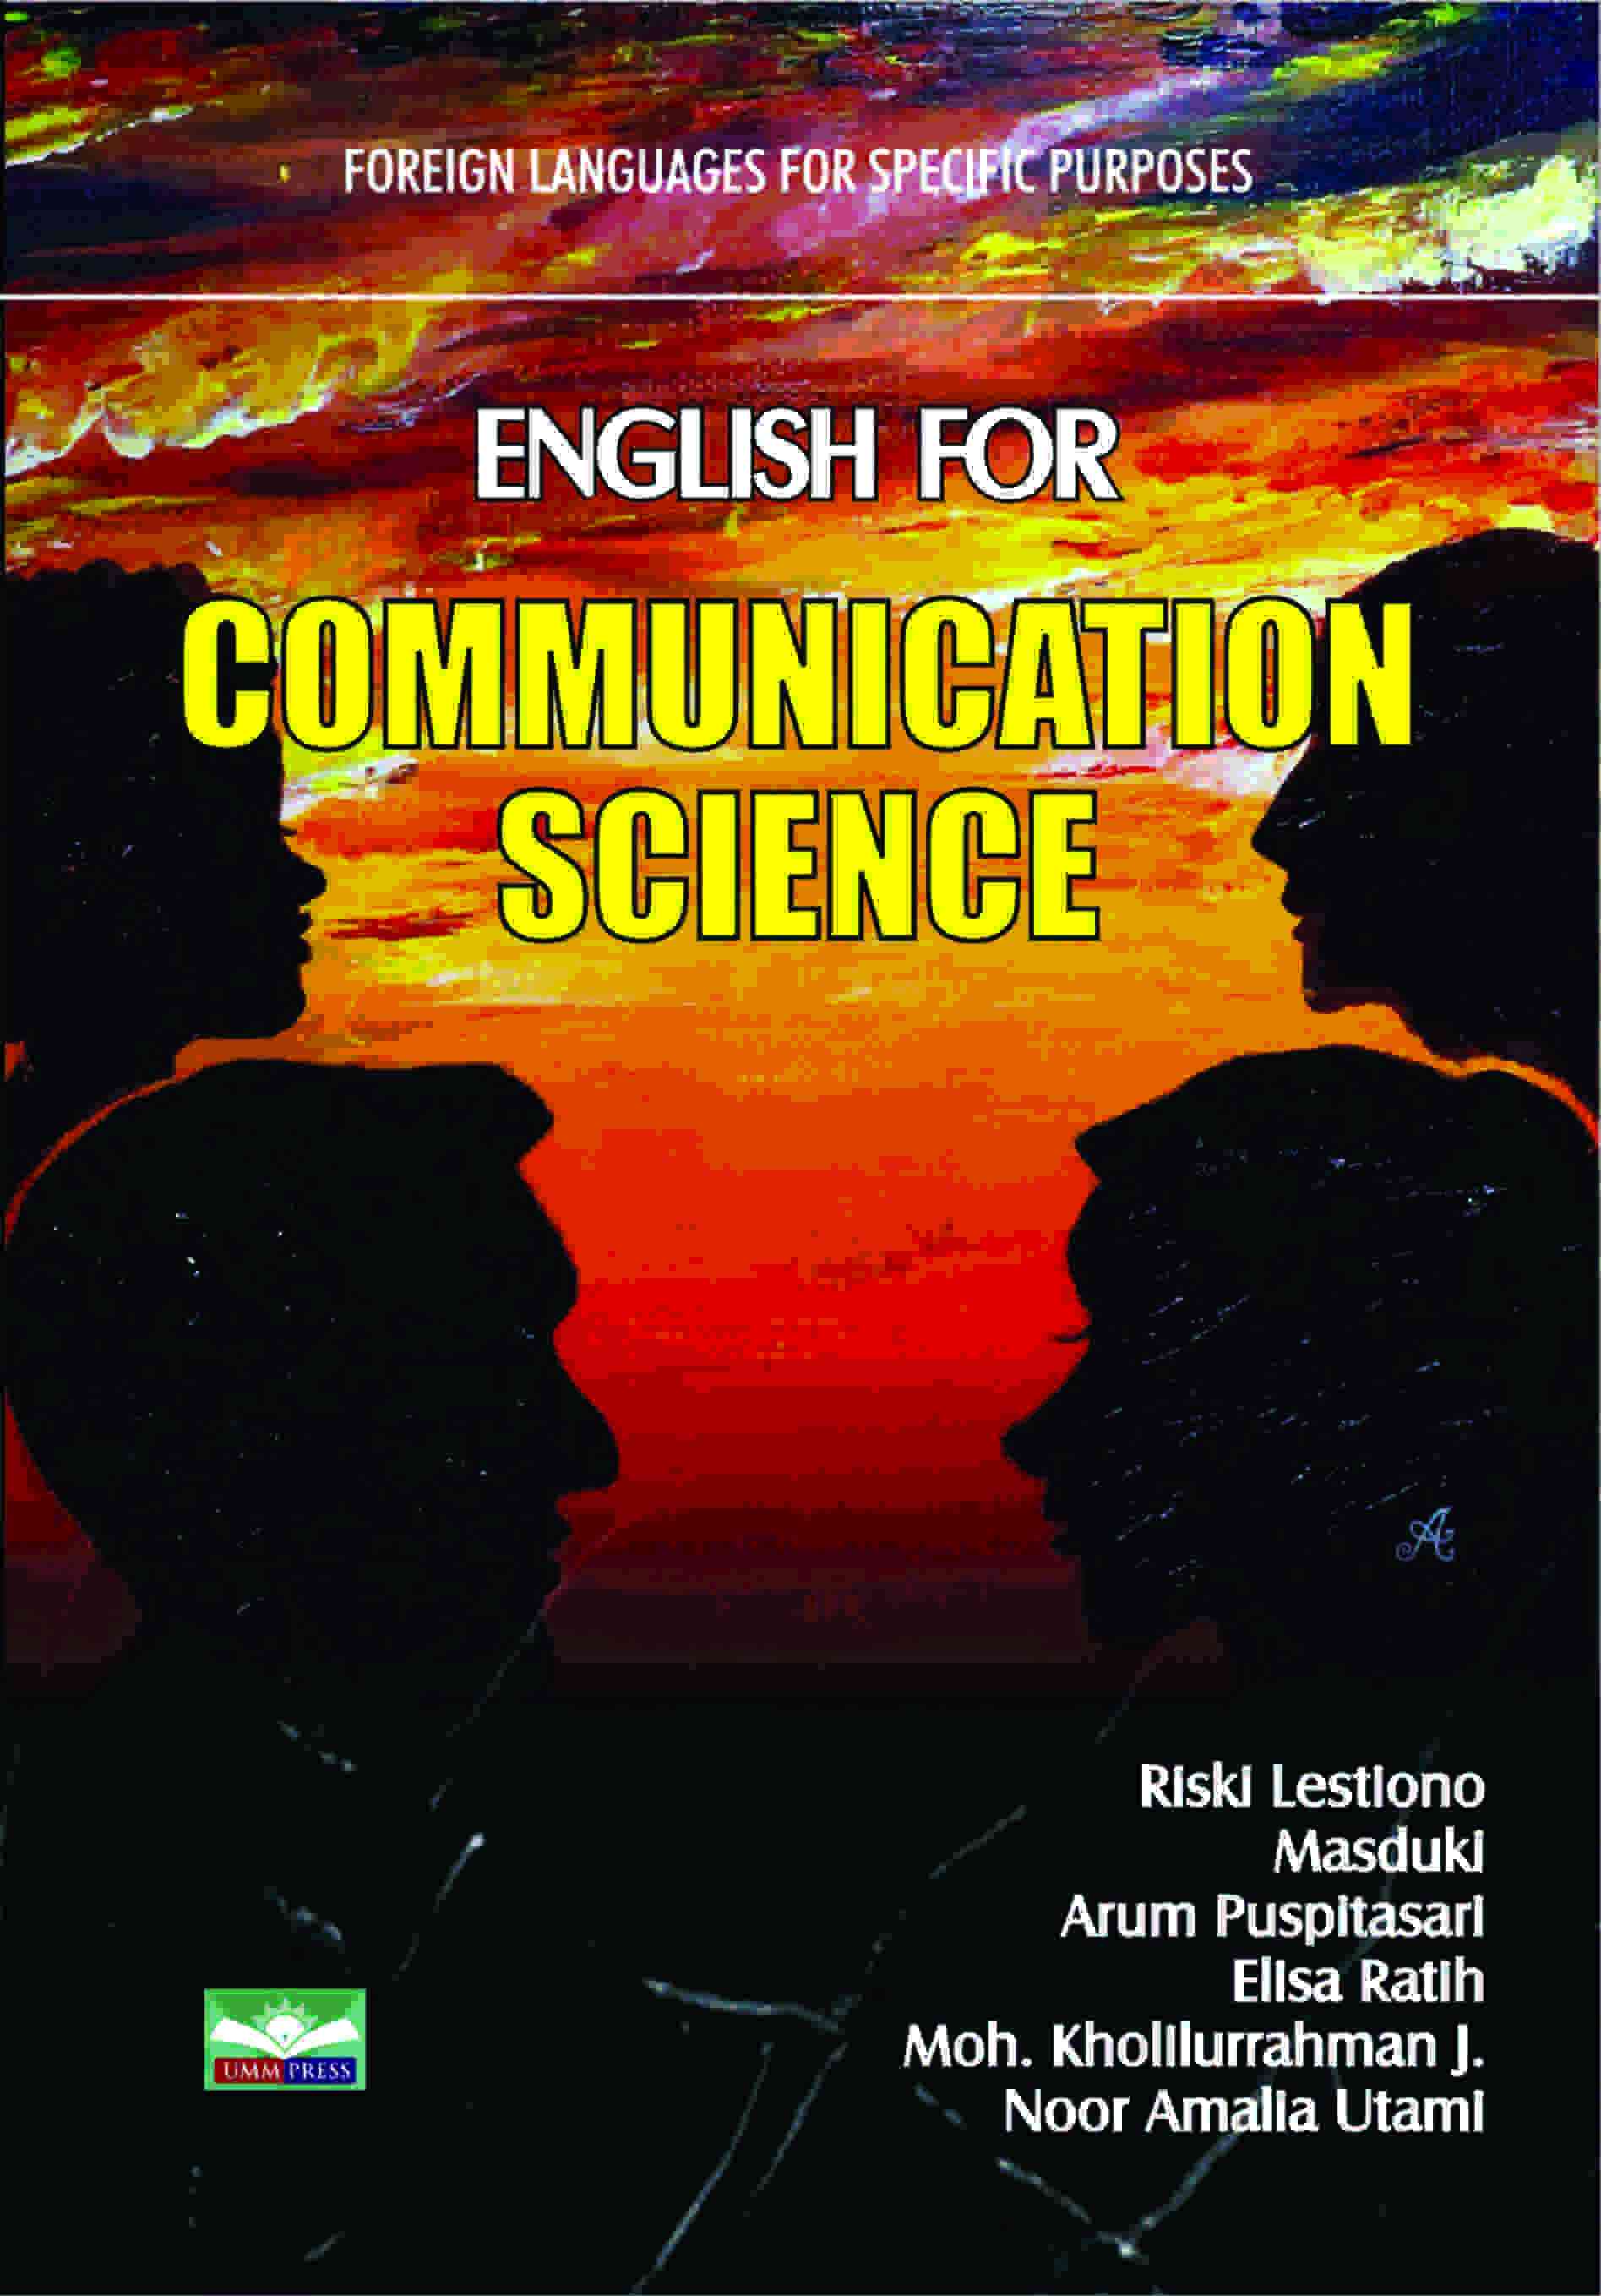 FLSP - ENGLISH FOR COMMUNICATION SCIENCE